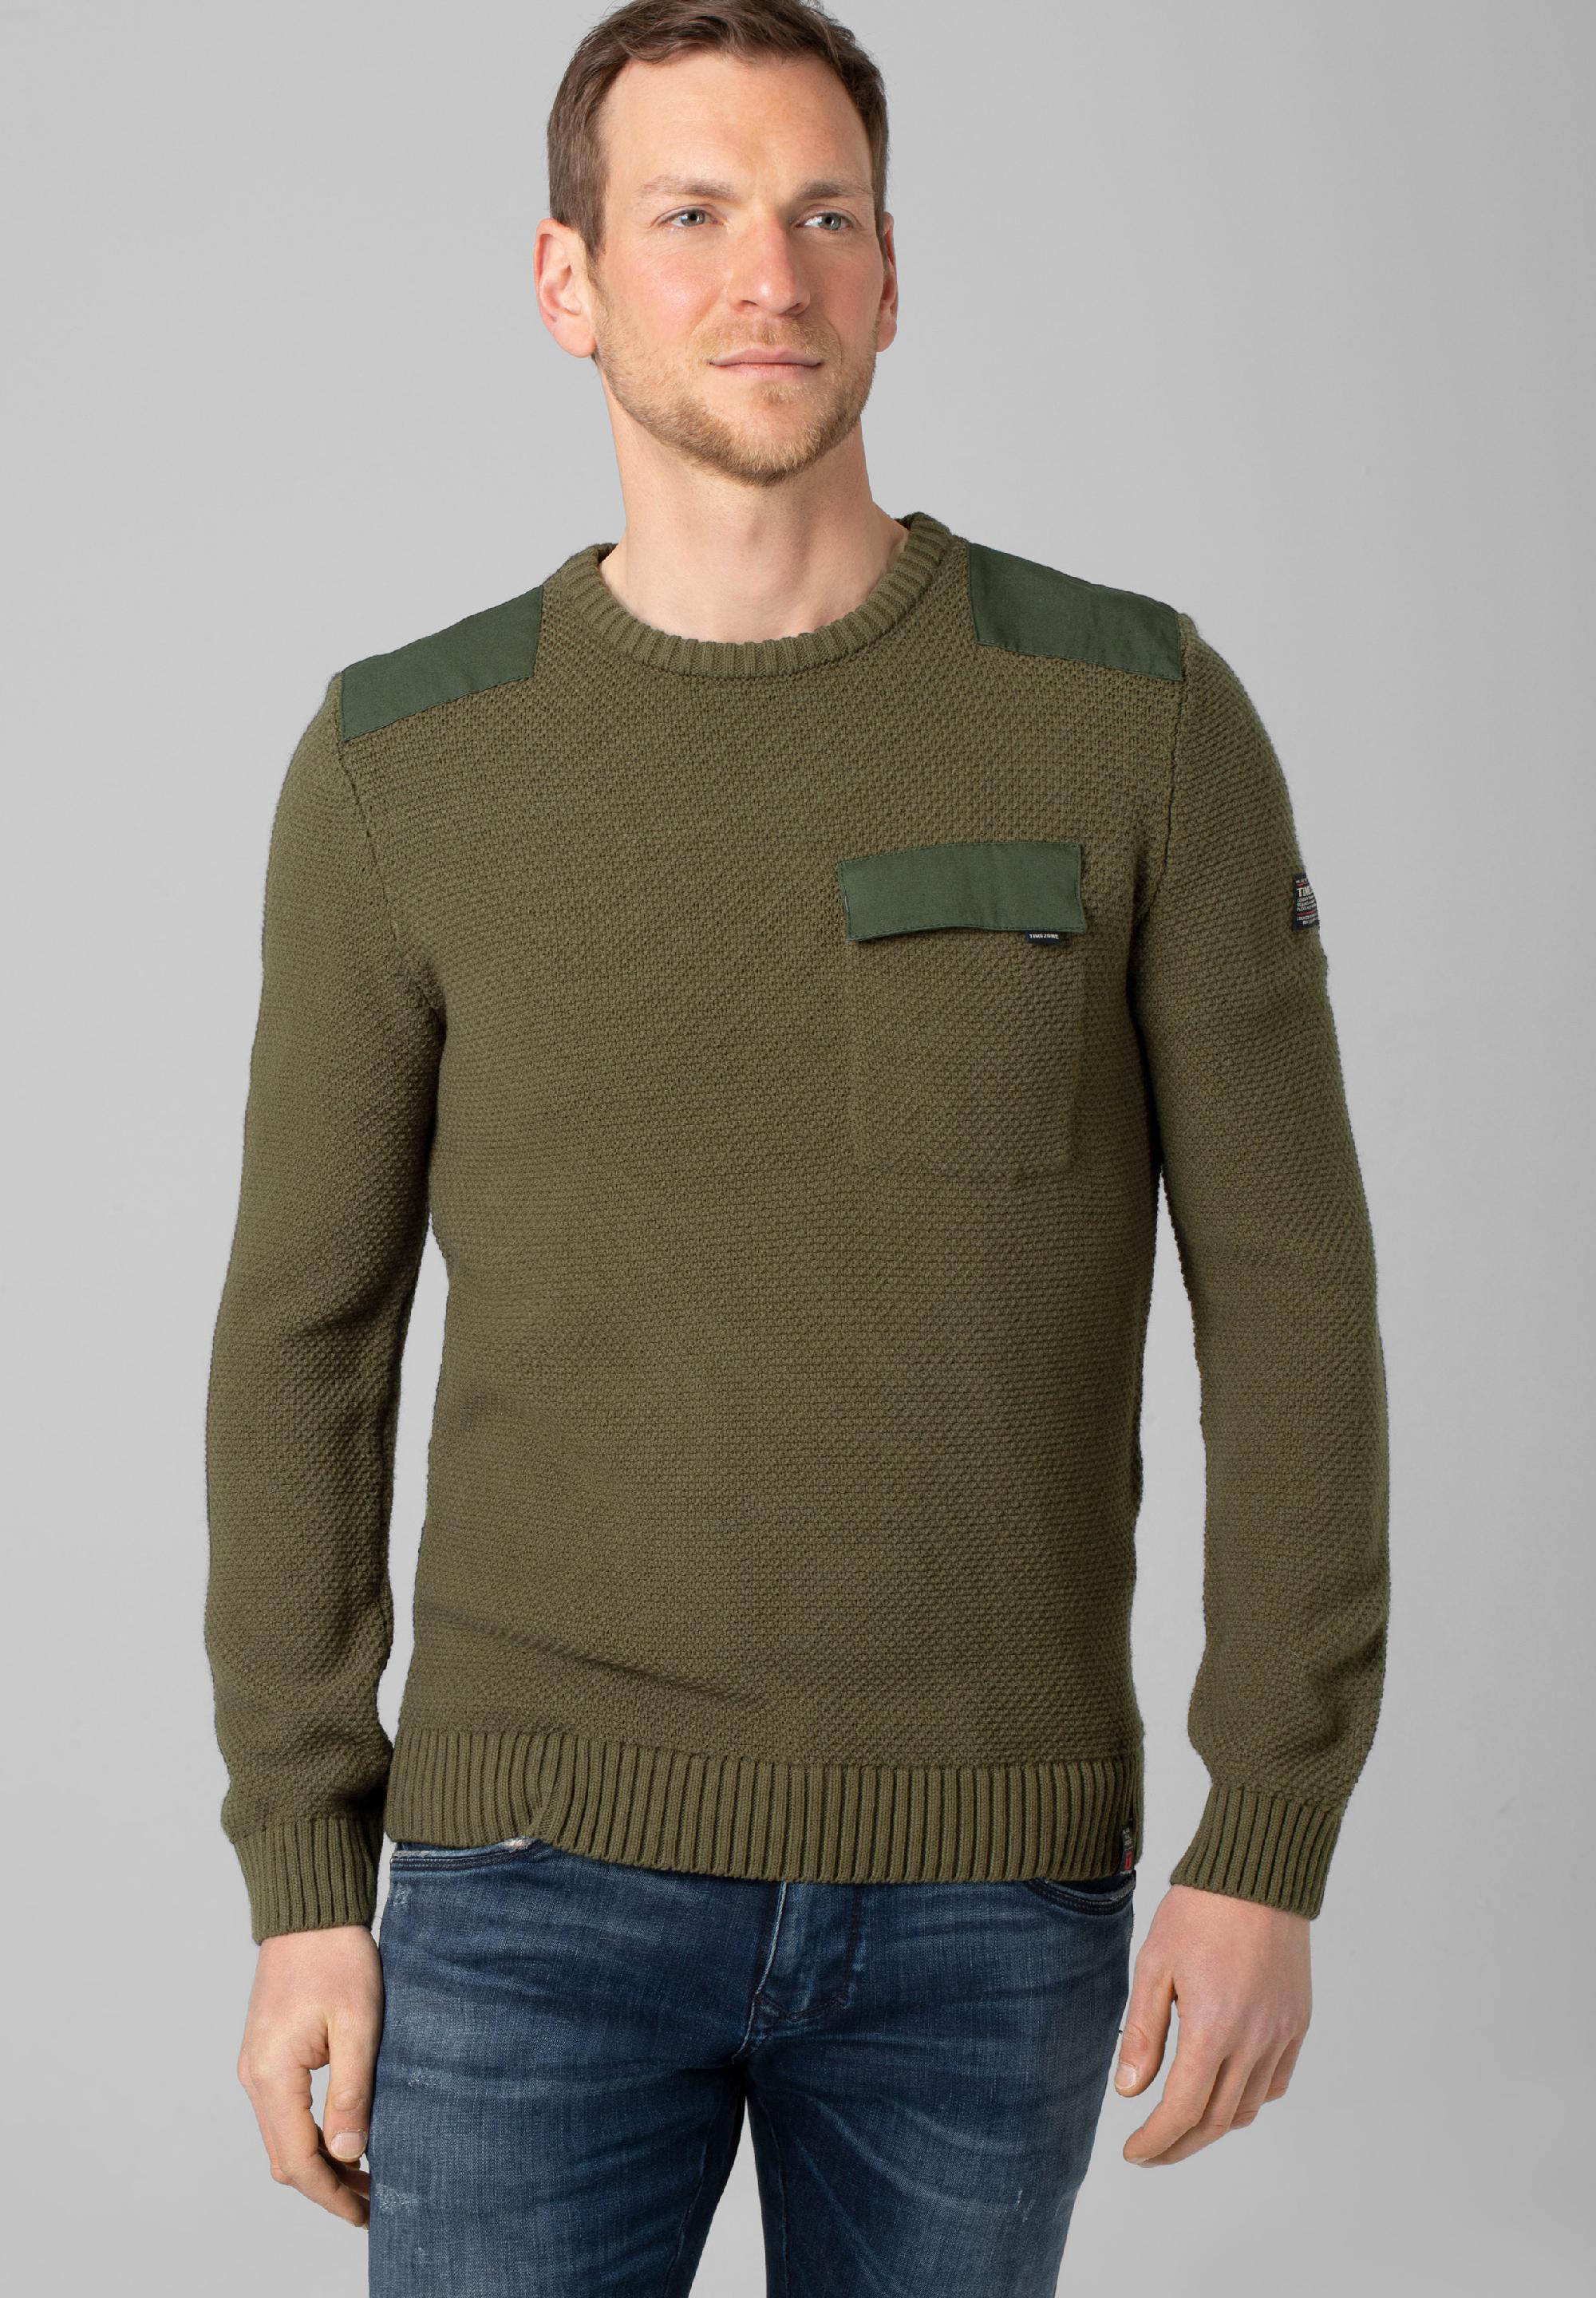 Fabricmix Crewneck Sweater